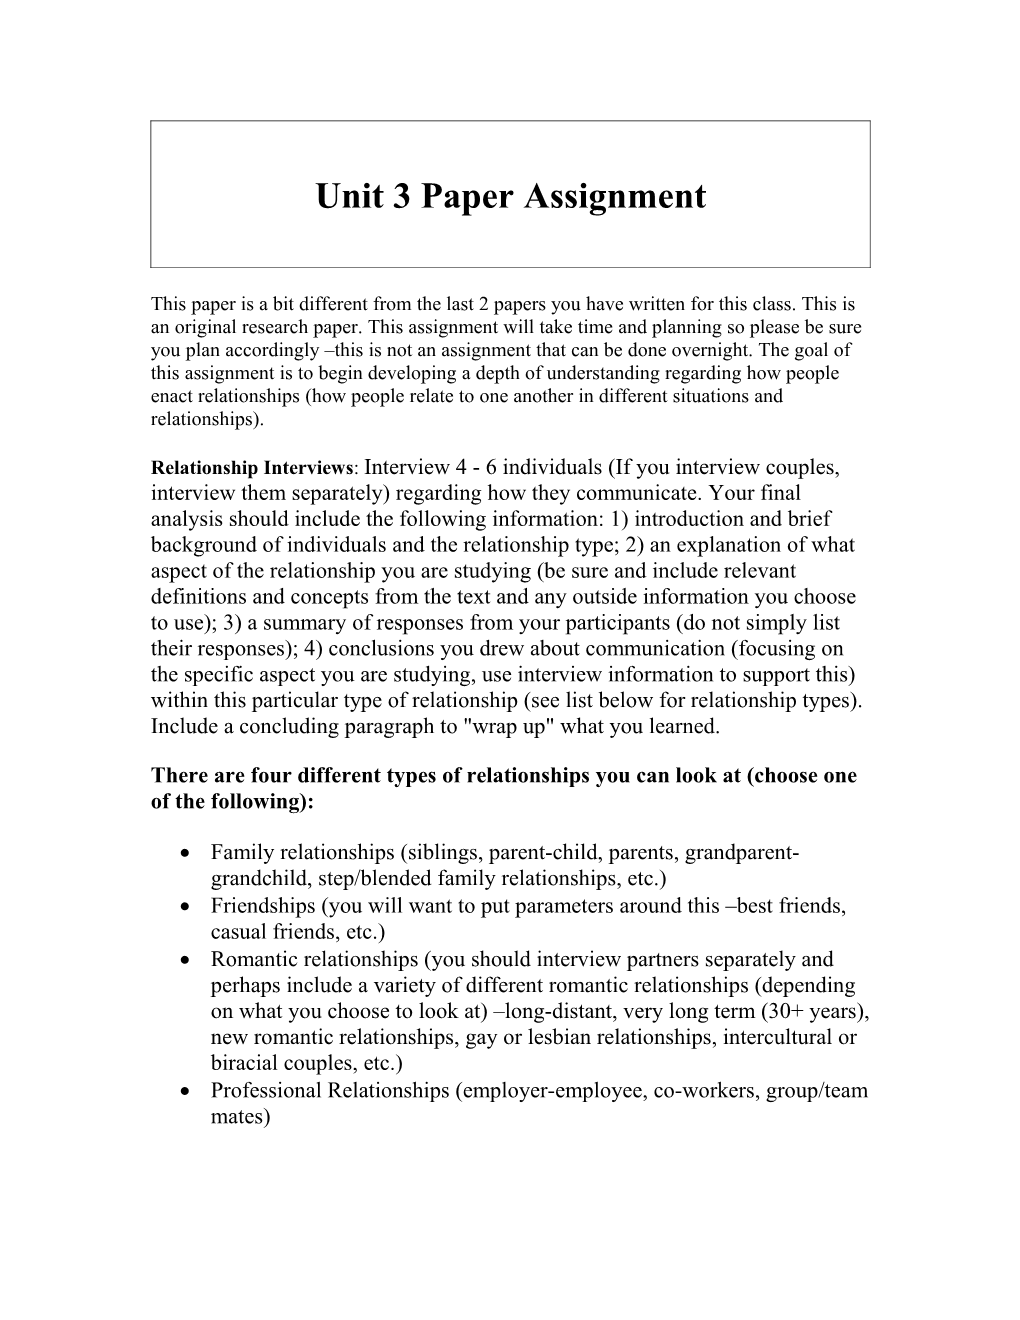 Unit 3 Paper Assignment